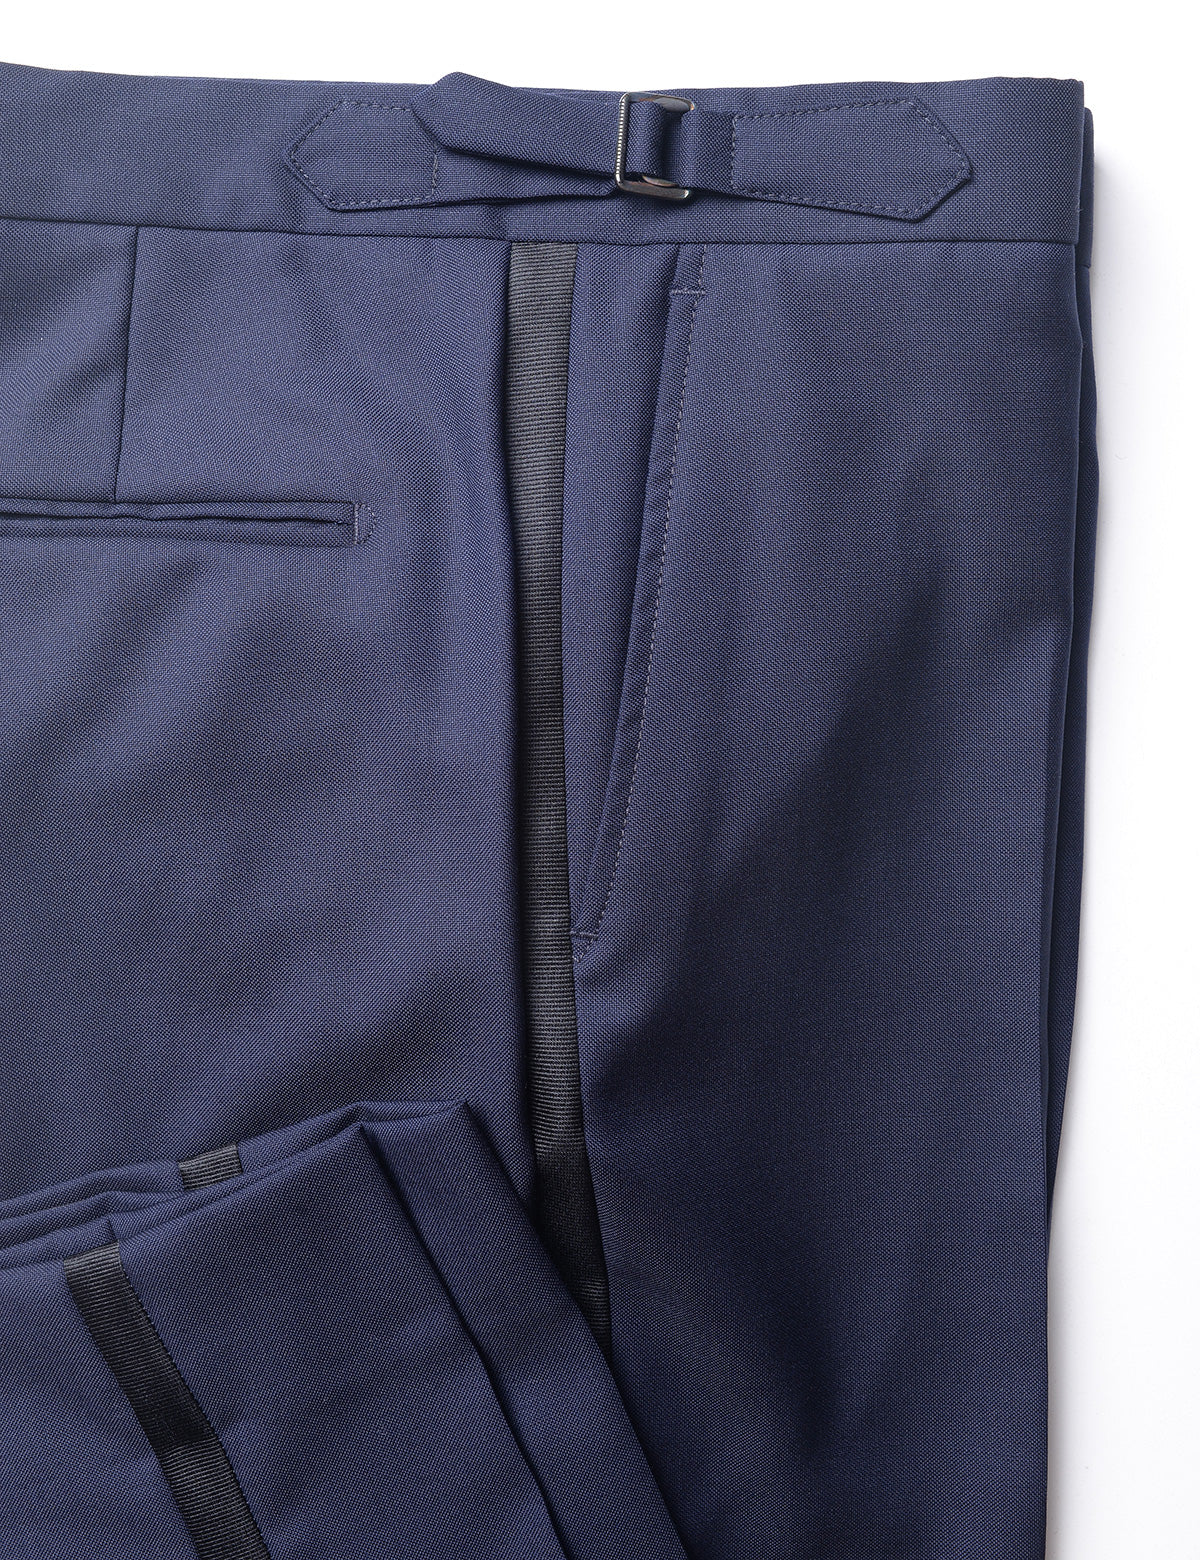 Detail of BKT50 Tuxedo Trouser in Super 110s - Navy with Grosgrain Stripe showing side adjuster, grosgrain stripe